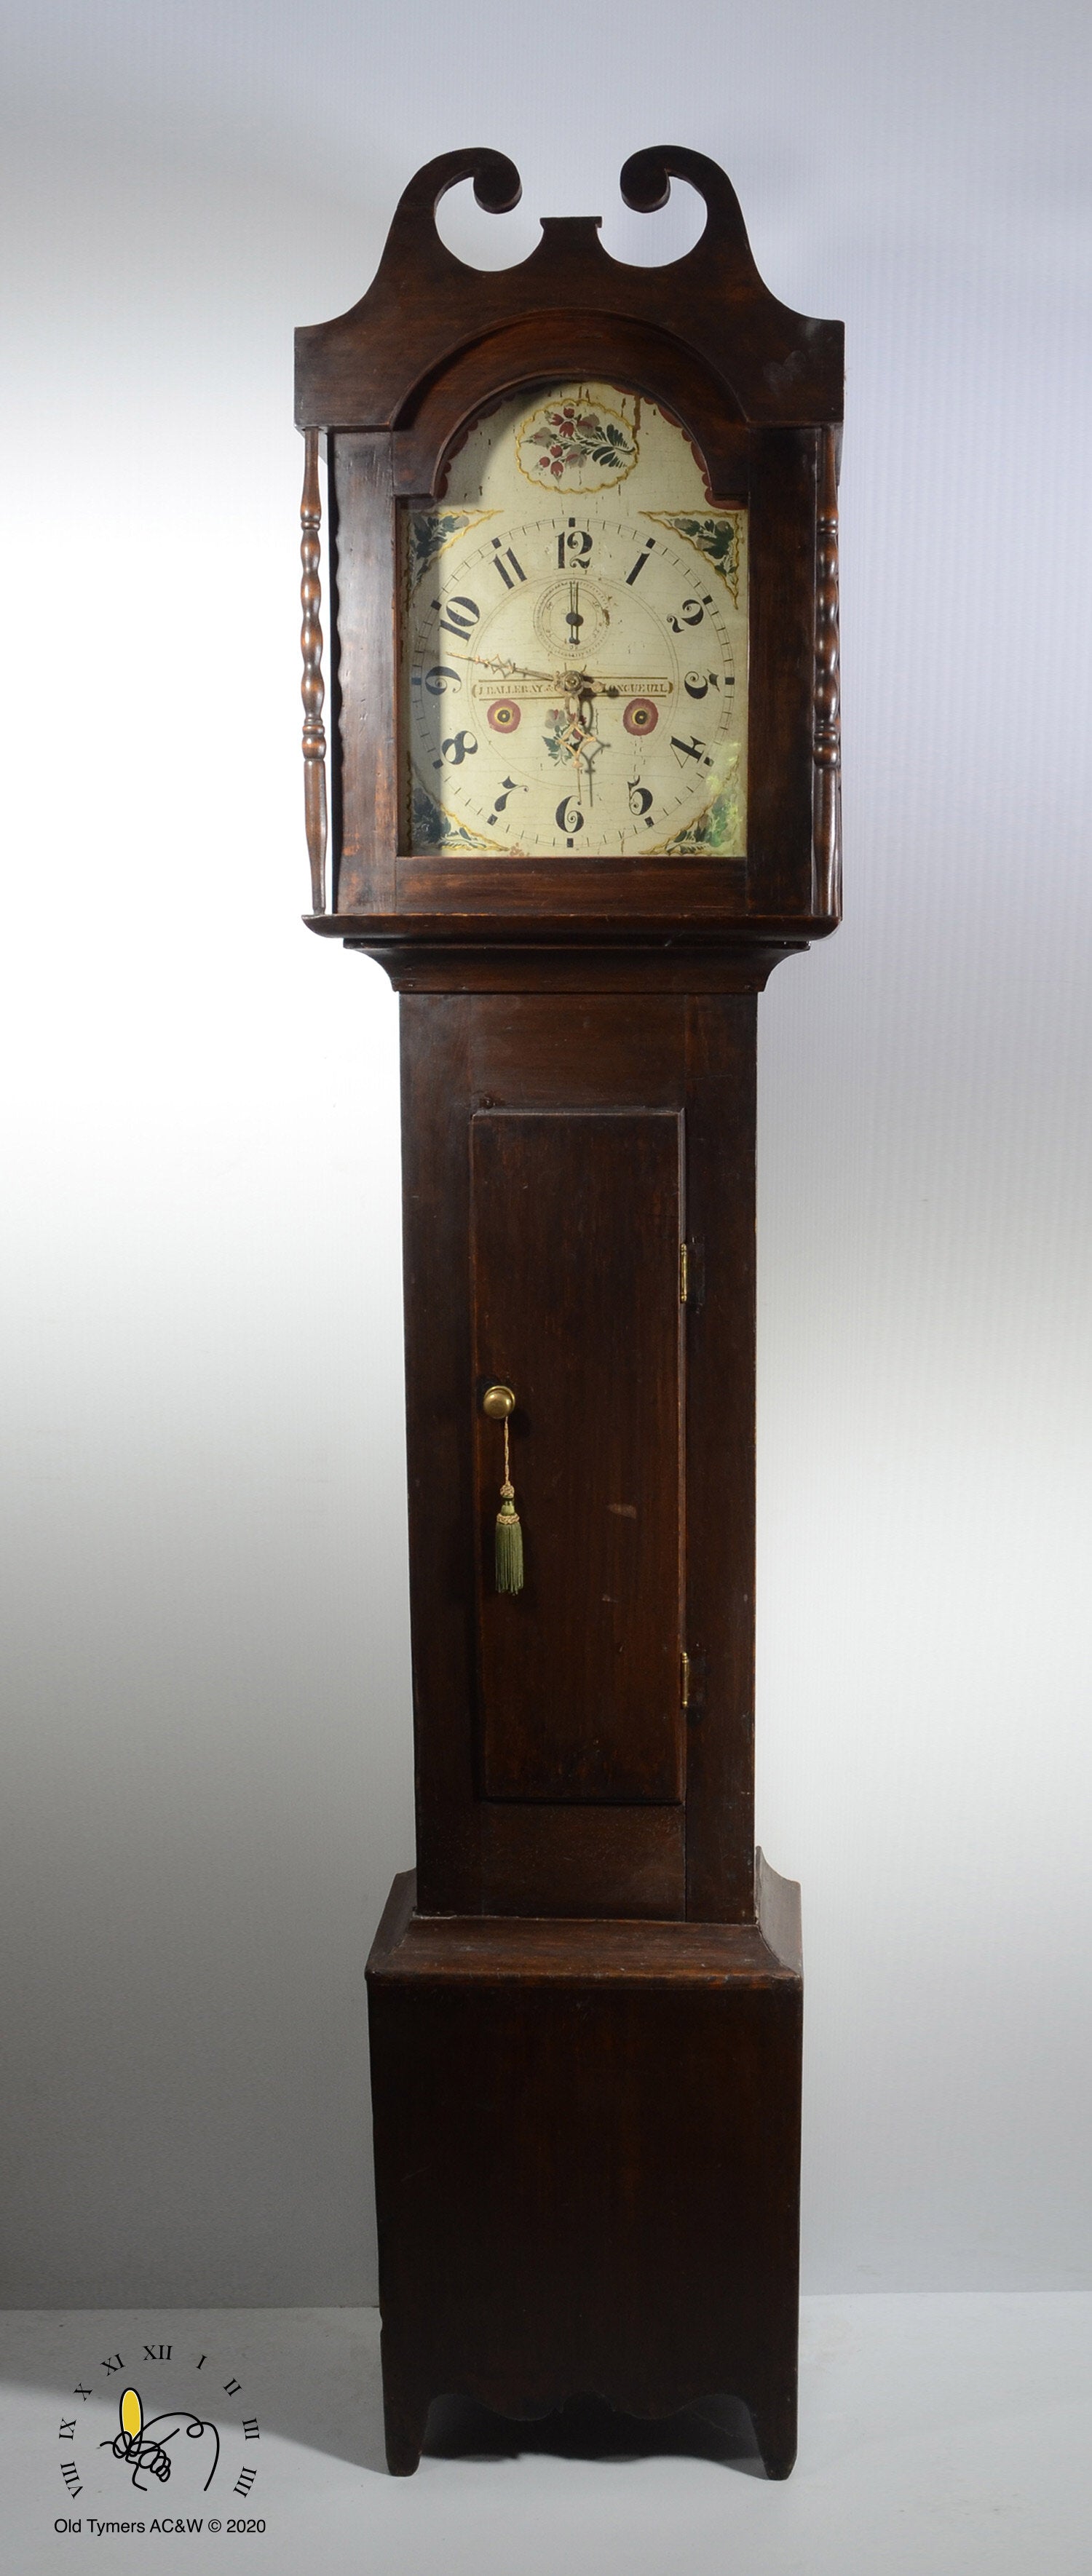 Joseph Balleray Wood Works Tall Case Clock